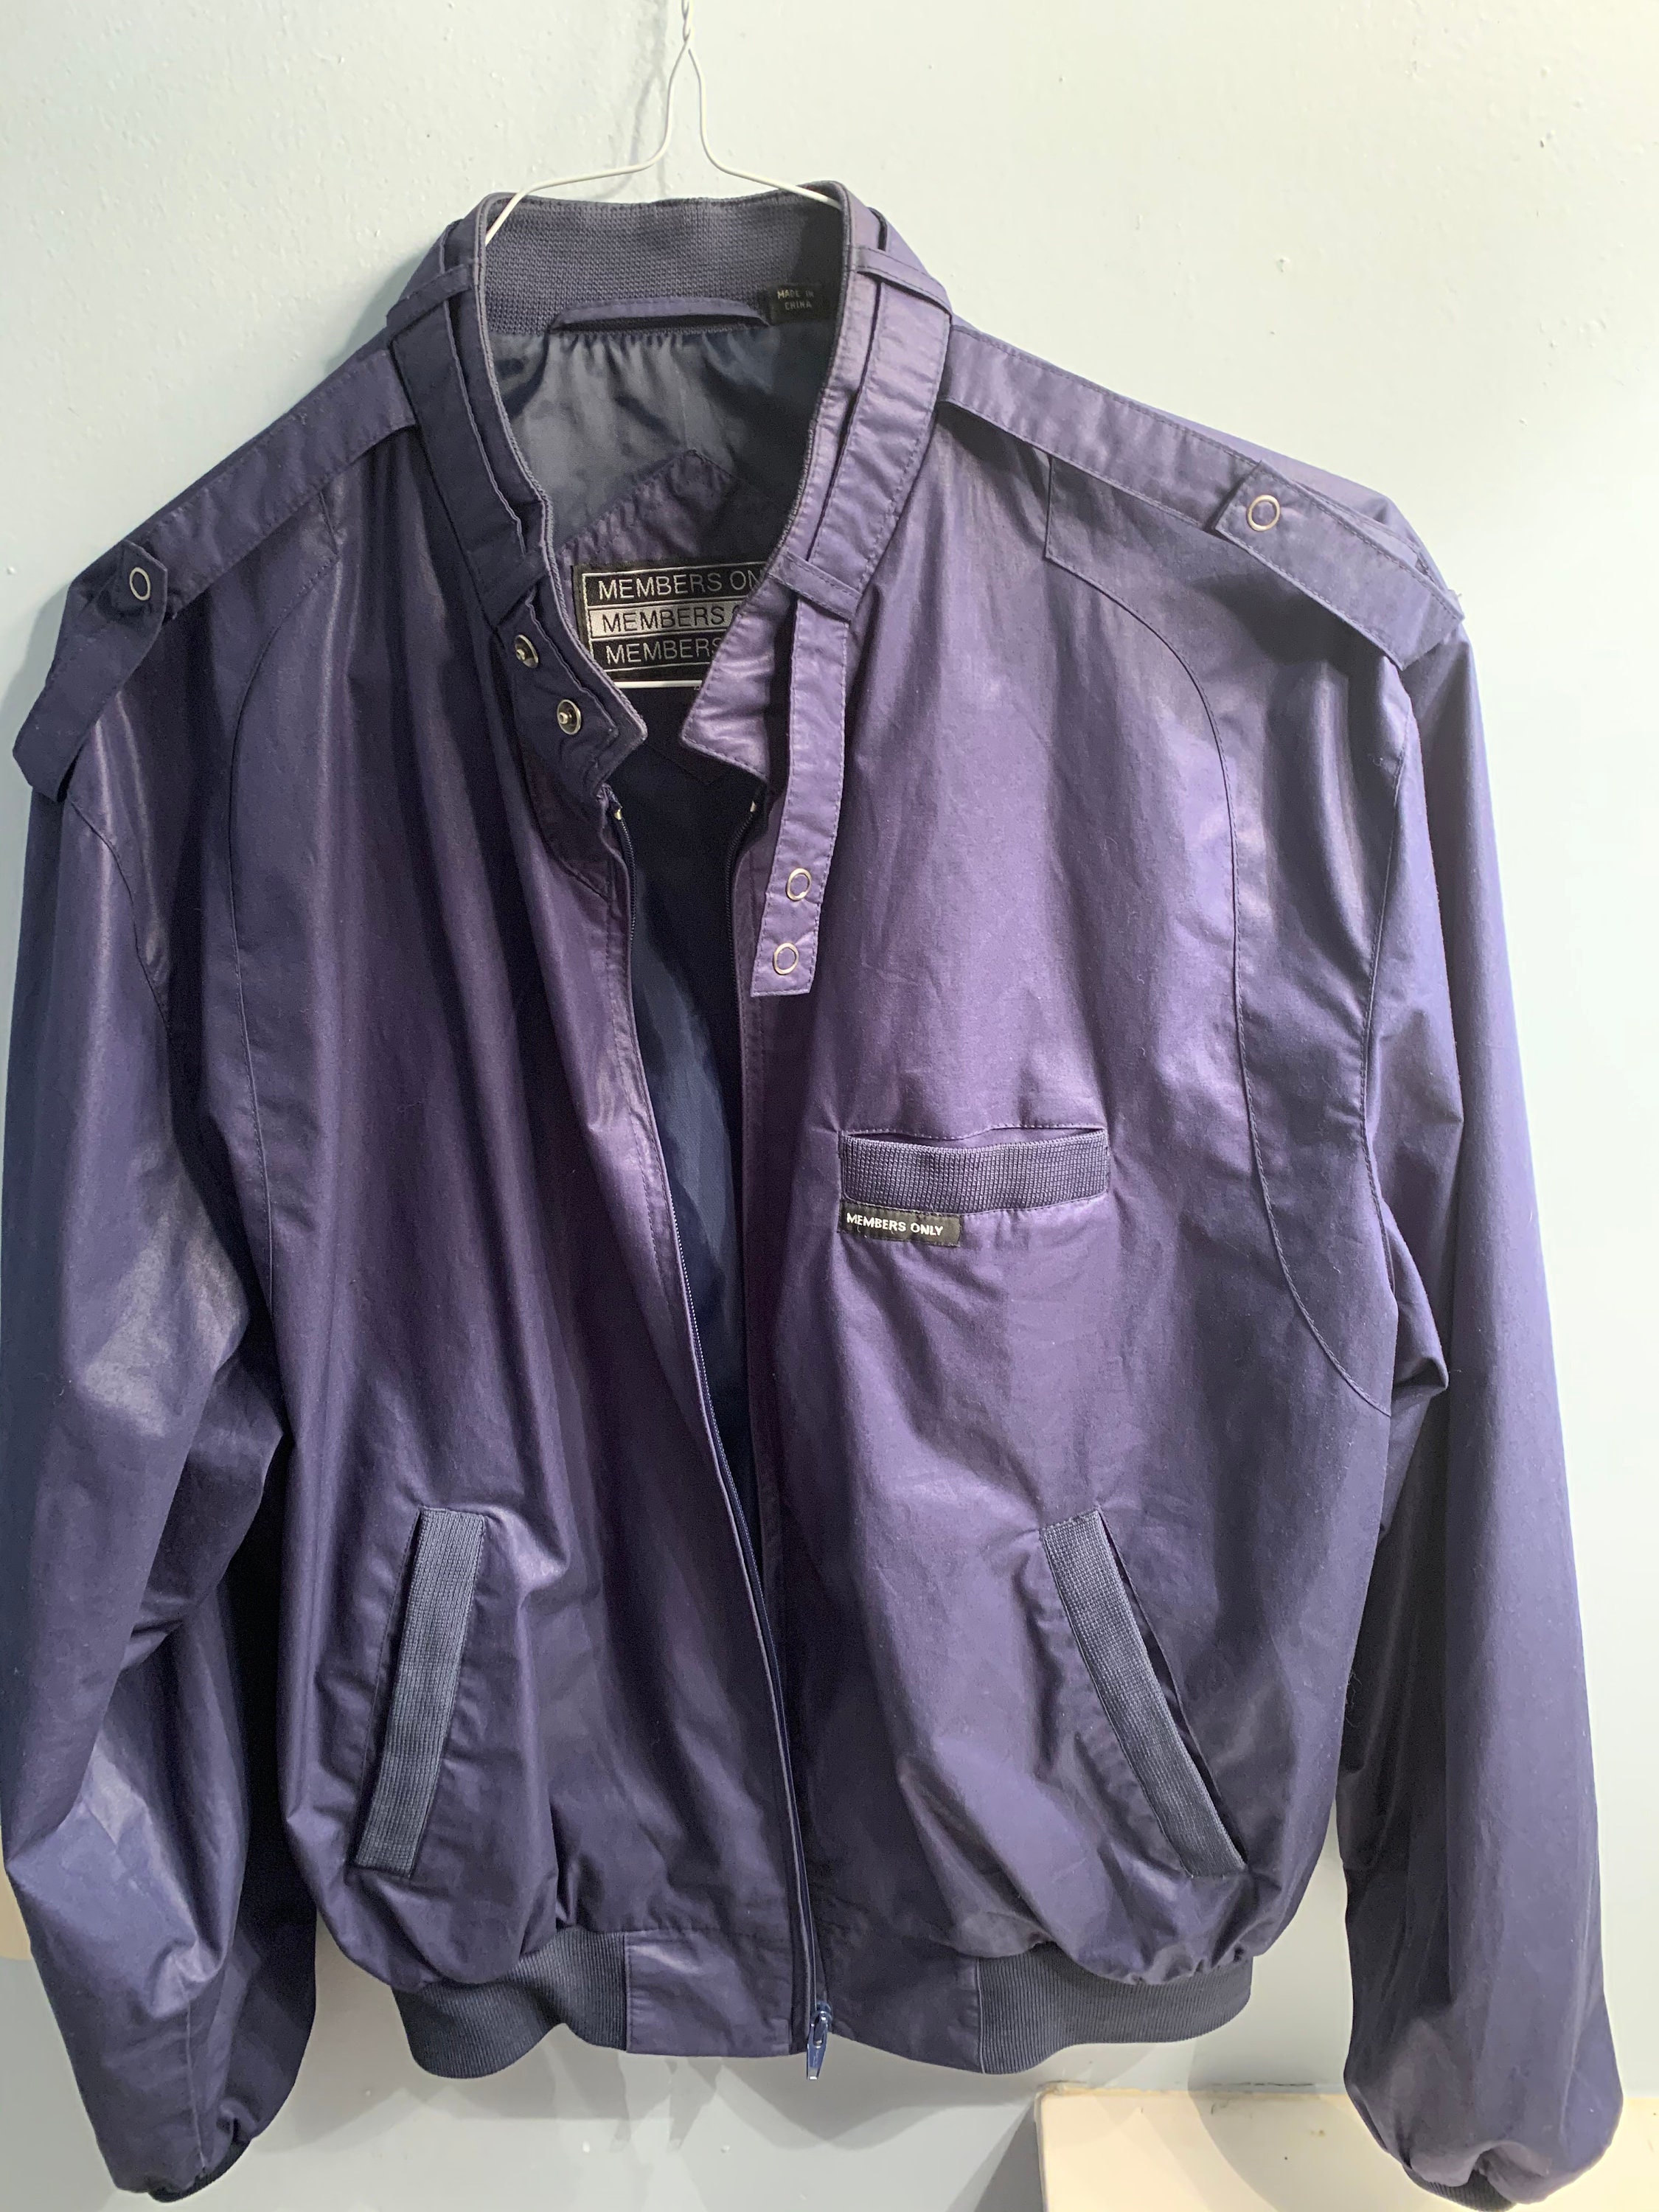 VINTAGE/RETRO Member's Only Jacket size 42 sz Medium | Etsy